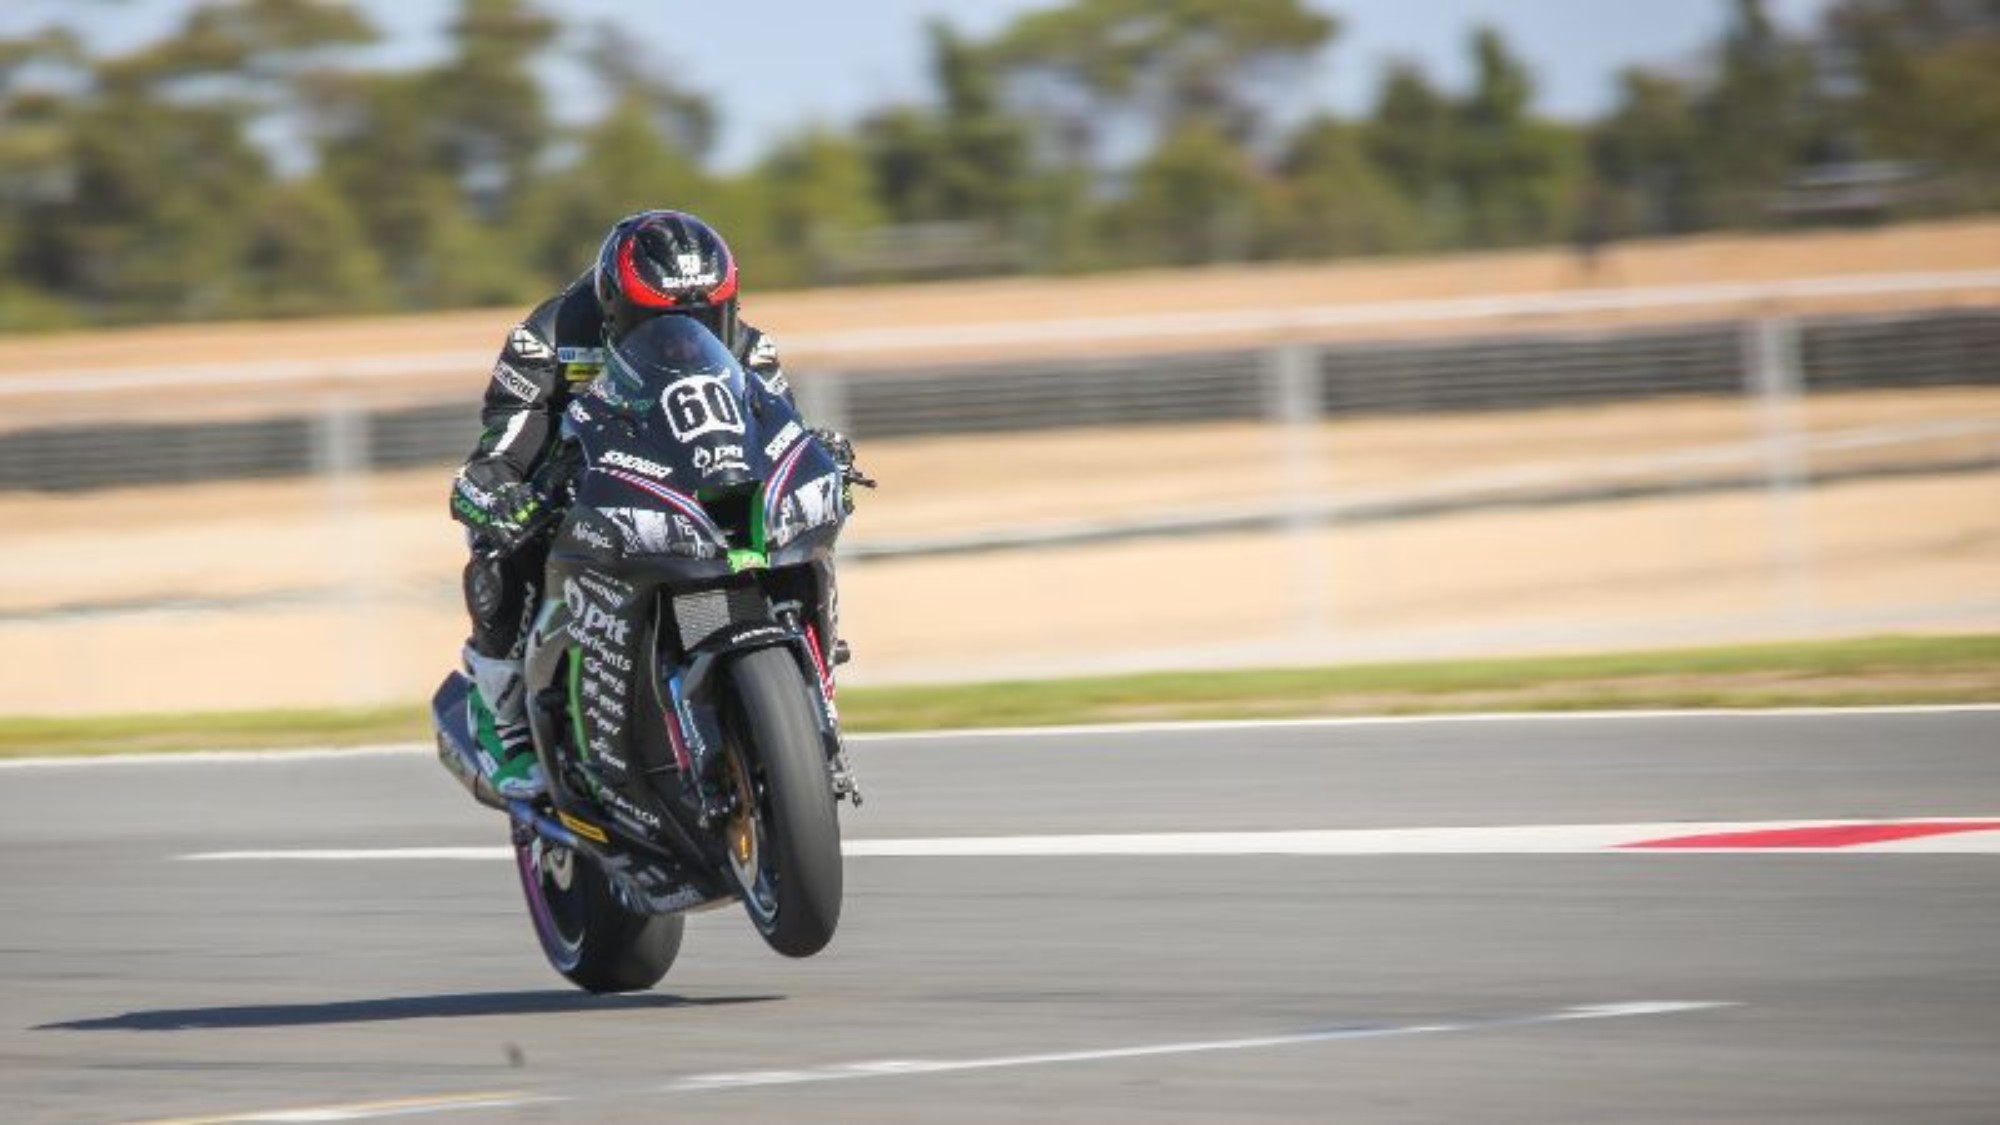 Asia Road Racing Championship: Bryan Staring Race One In Australia - Roadracing World Magazine | Motorcycle Riding, Racing & News